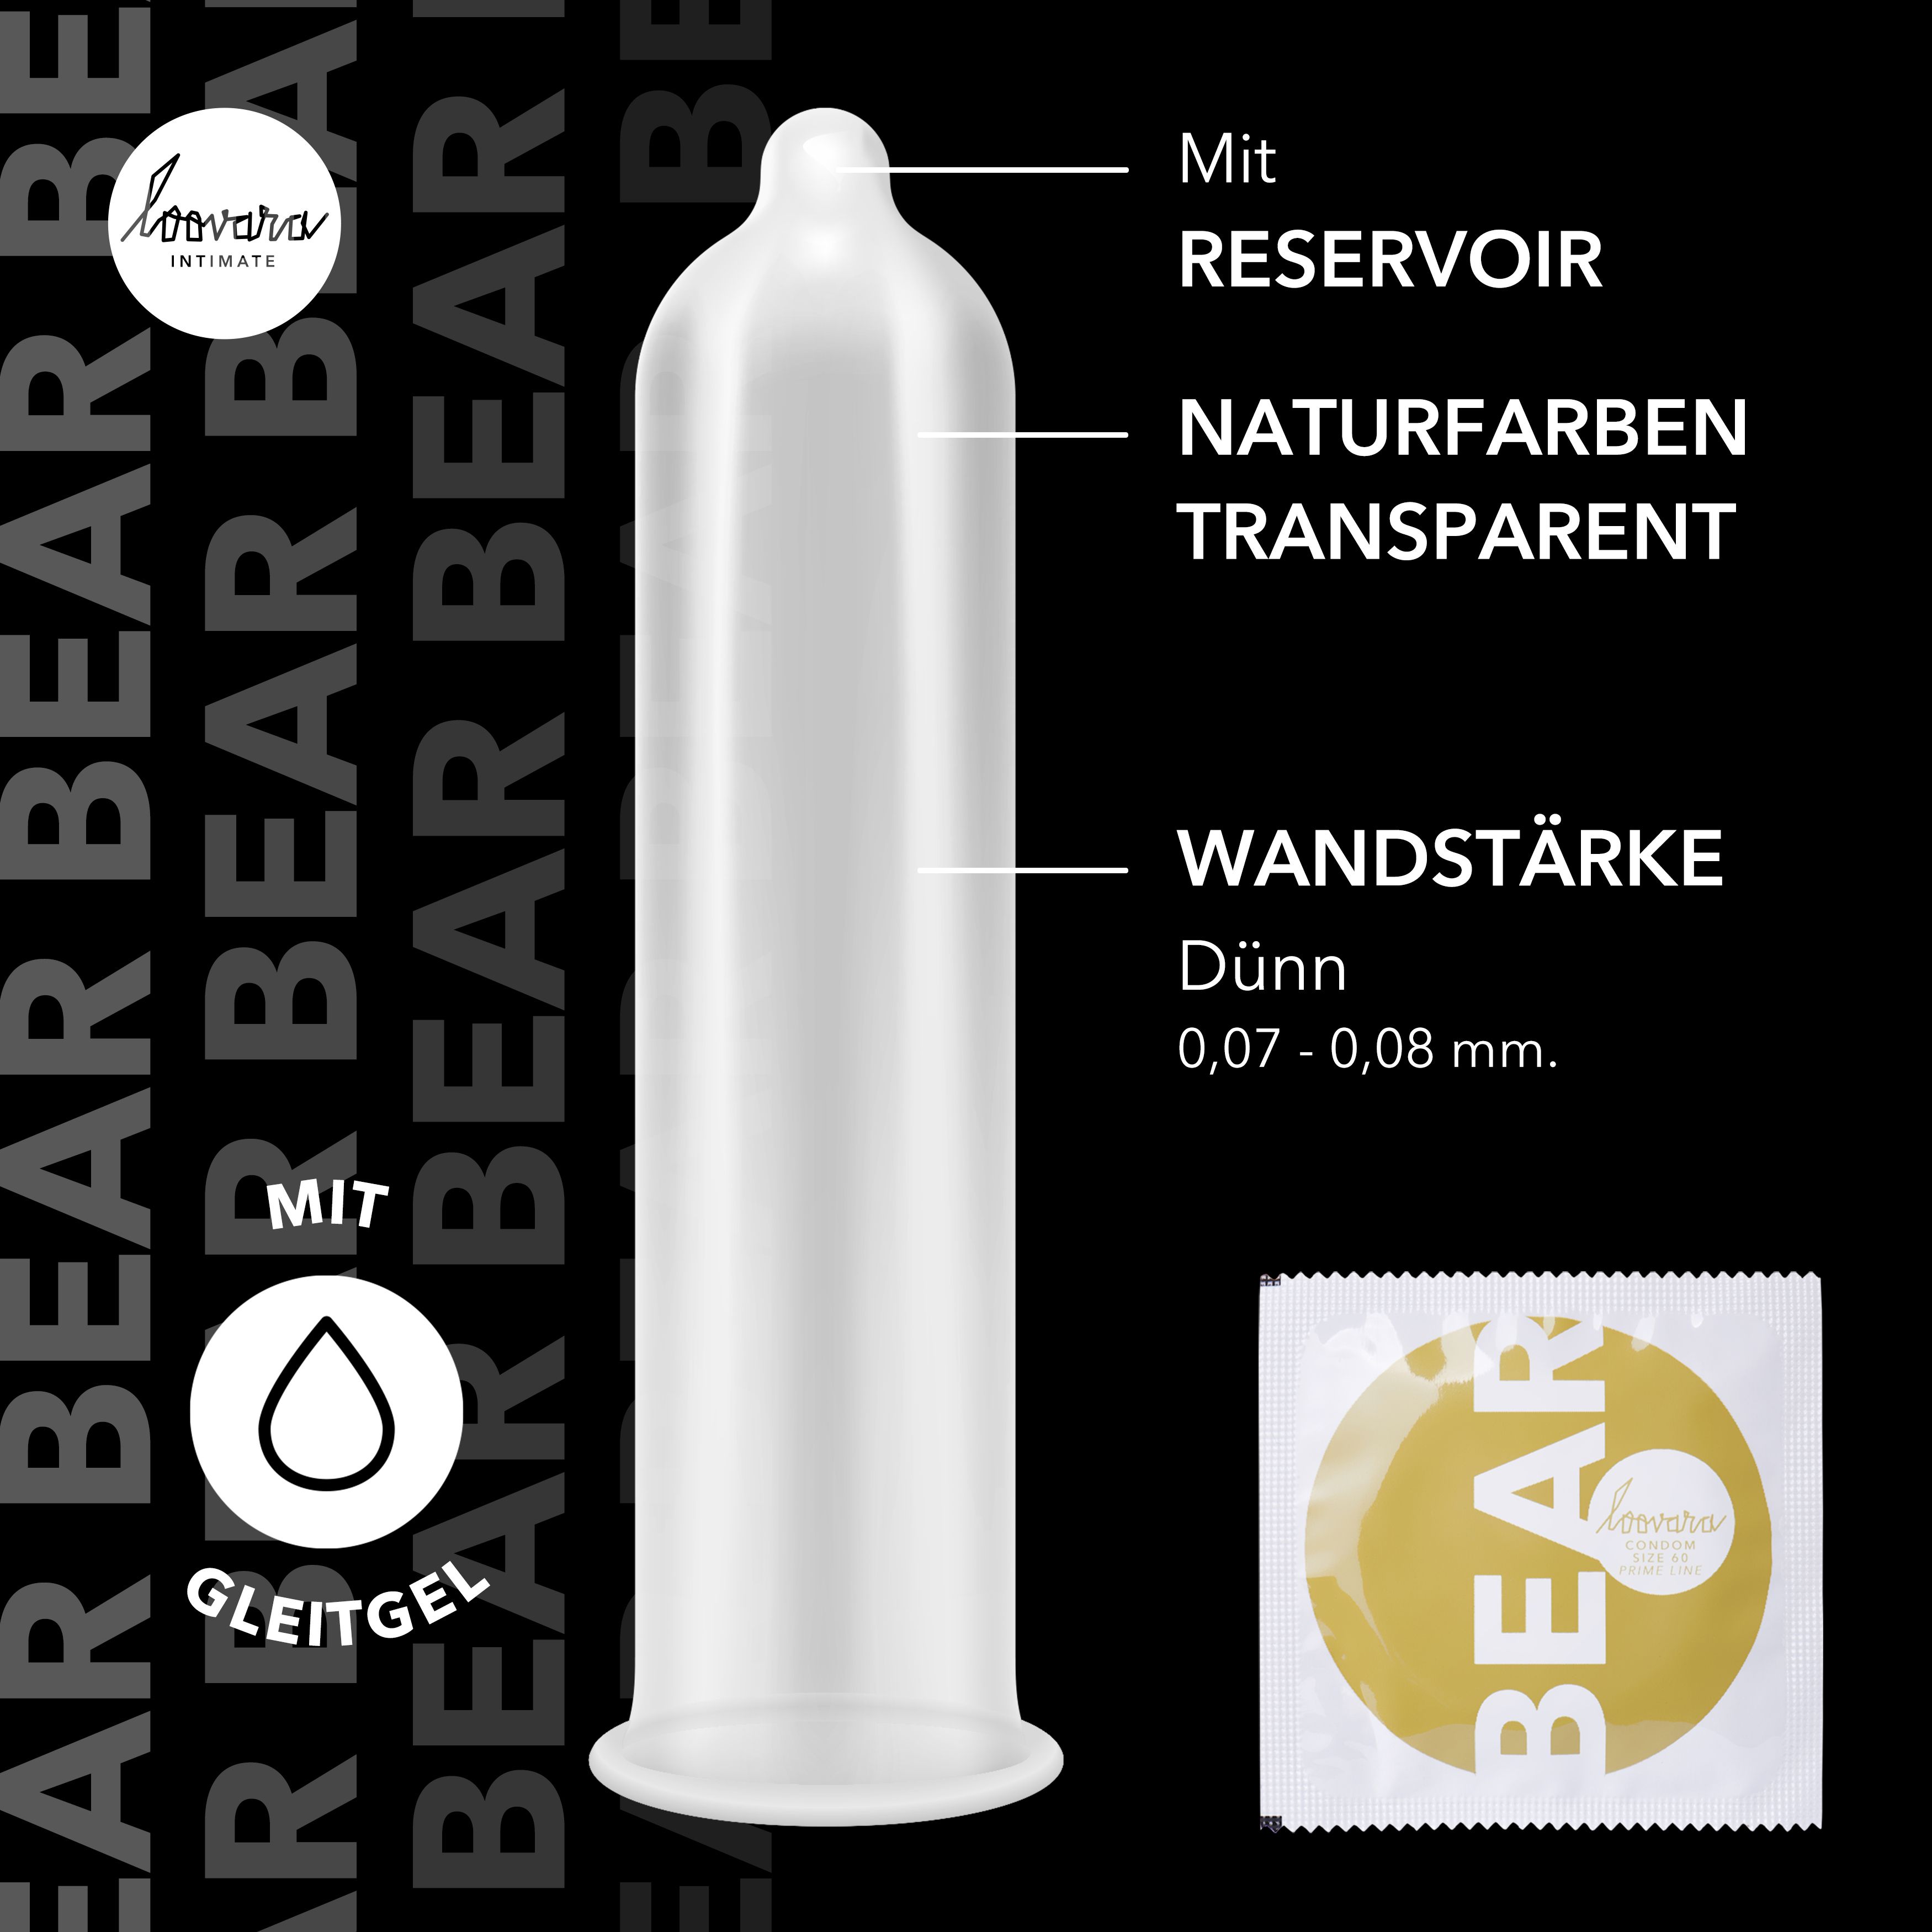 Loovara Kondome - BEAR - Größe 60 mm - XL - Präservative